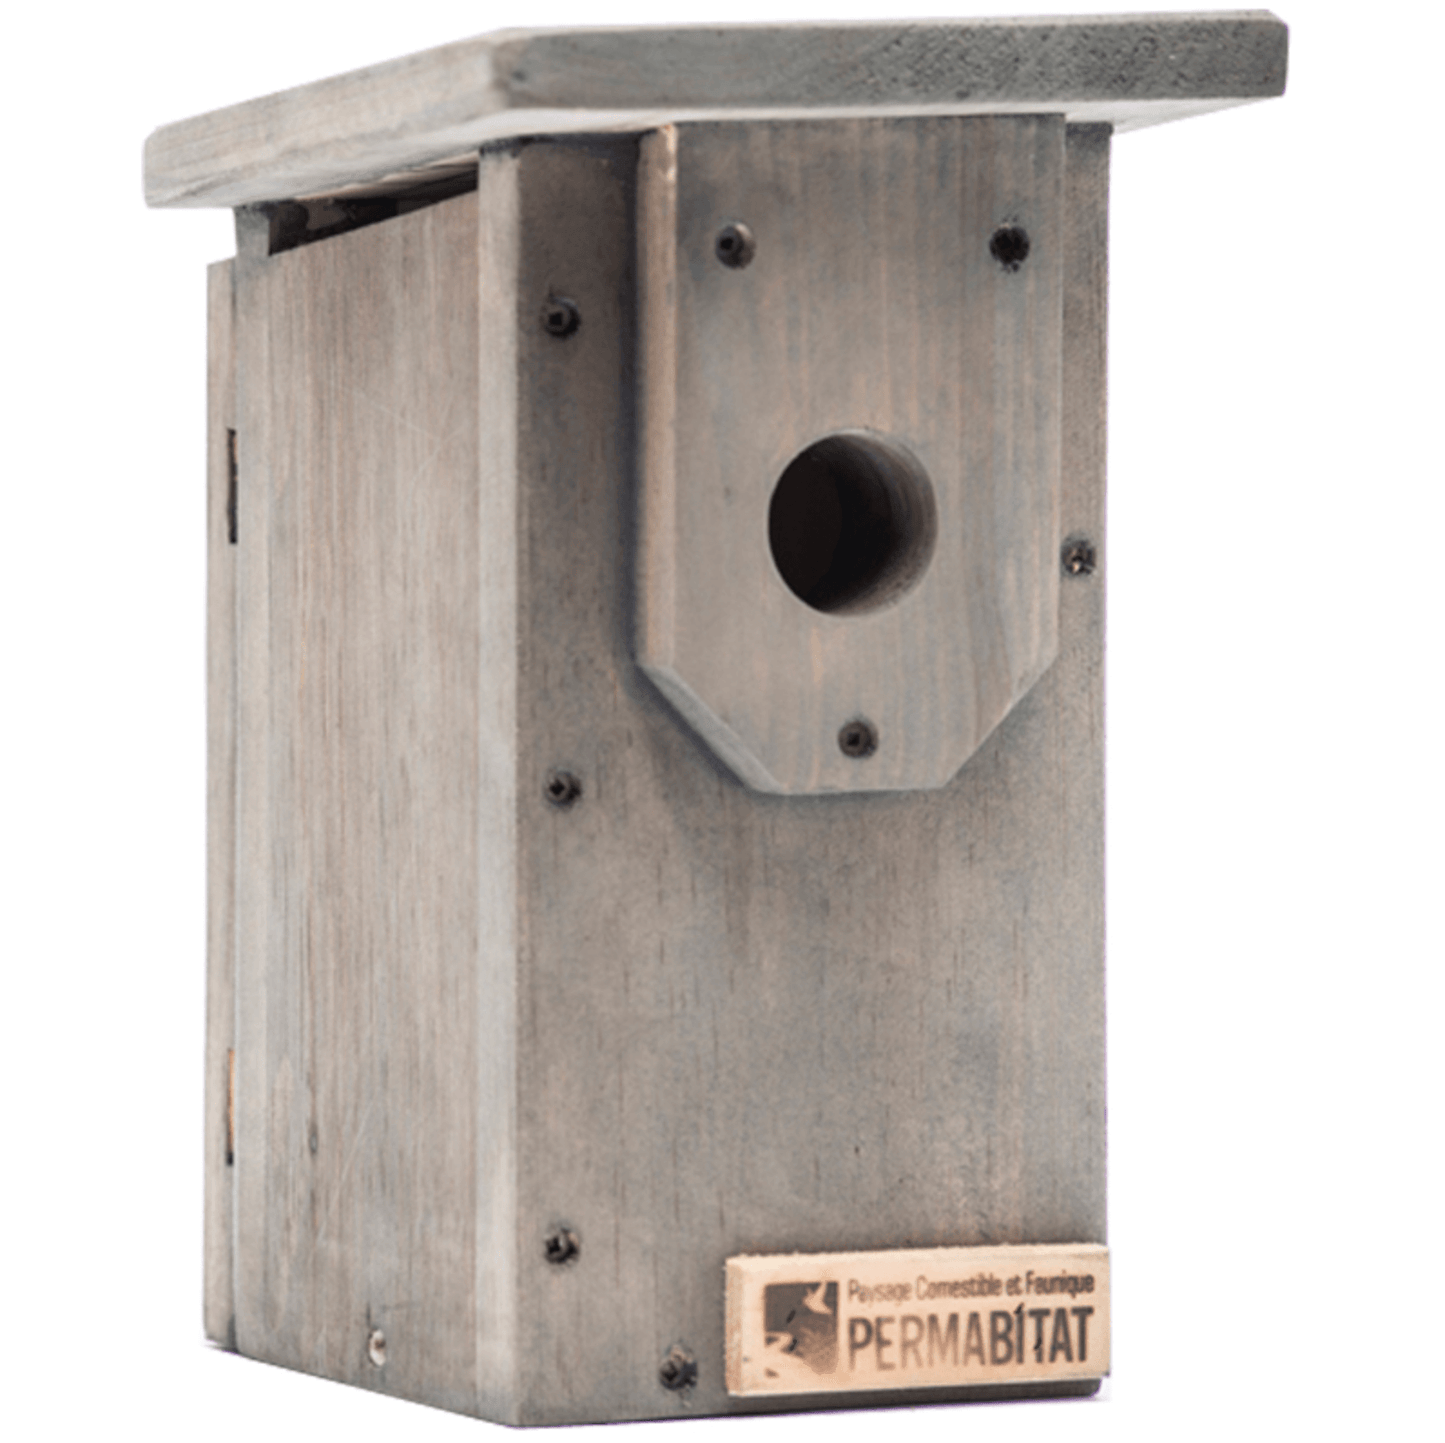 Tree Swallow and Eastern Bluebird Nest Box